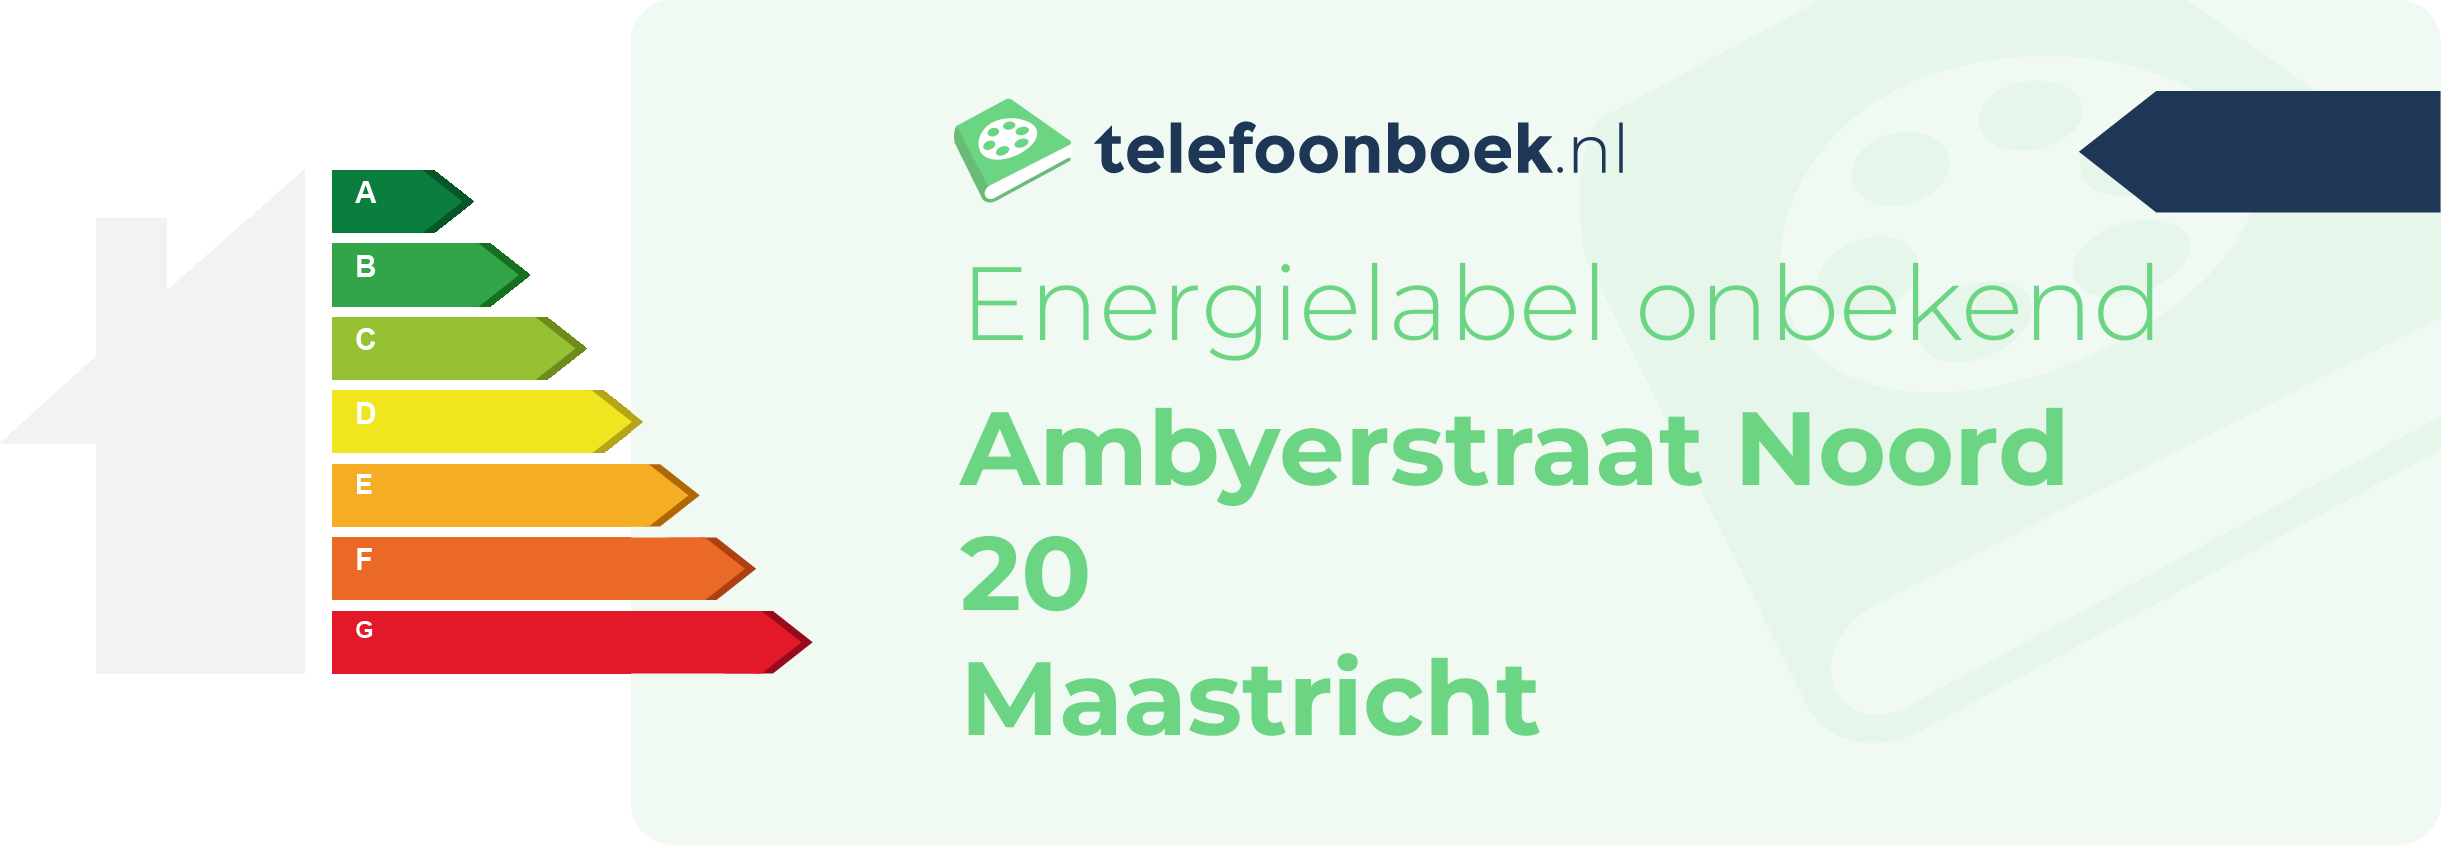 Energielabel Ambyerstraat Noord 20 Maastricht